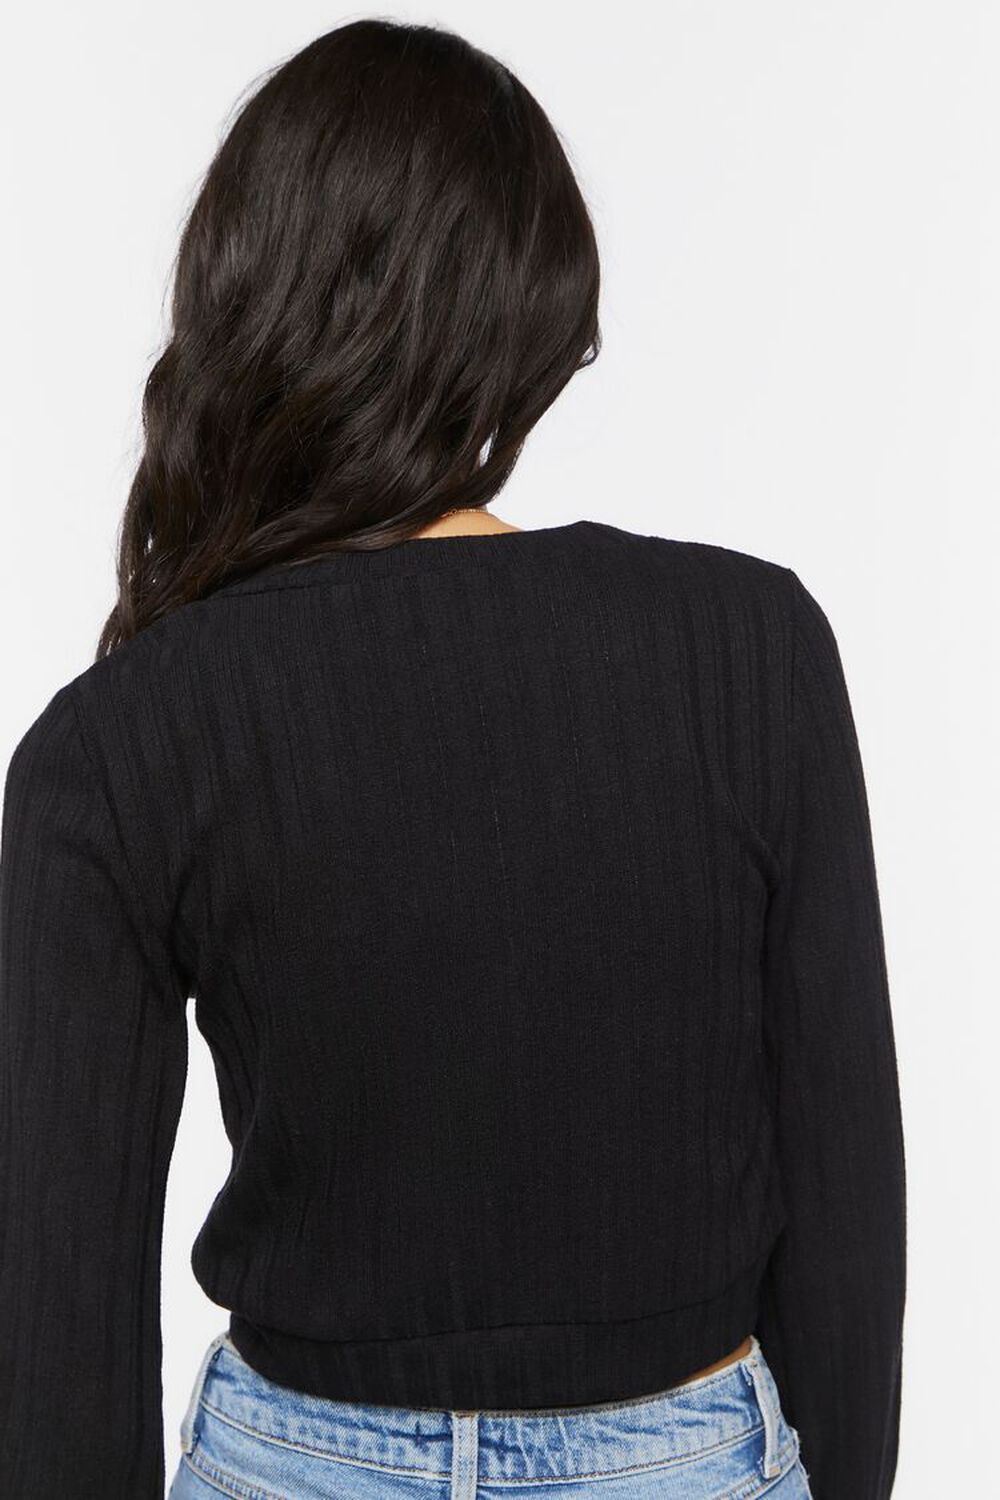 BLACK Cropped Cardigan Sweater, image 3